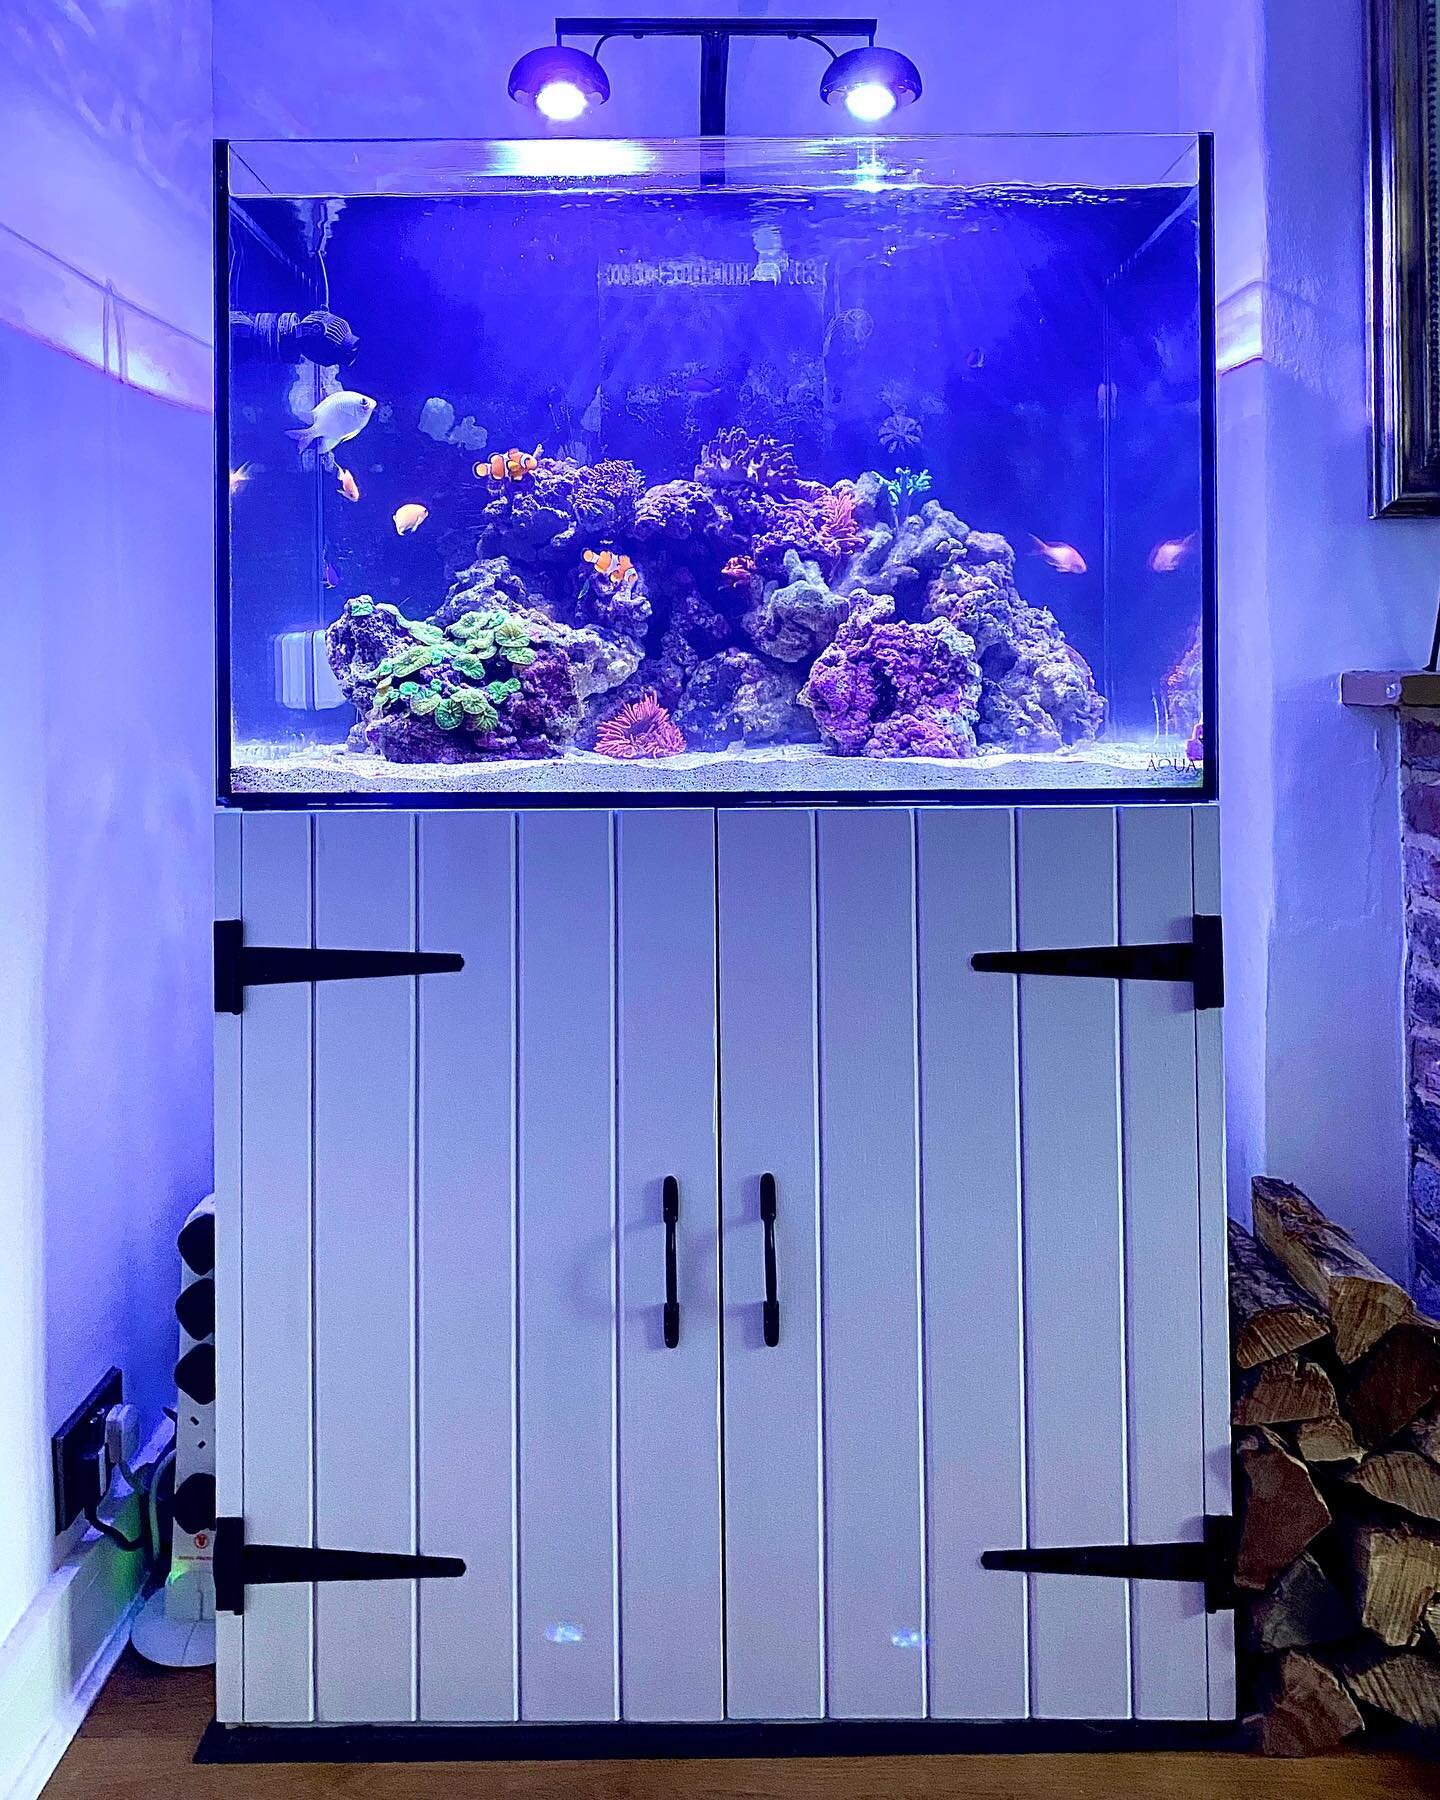 New bespoke doors for fish tank to match existing cottage interior 
#hertfordbuilder